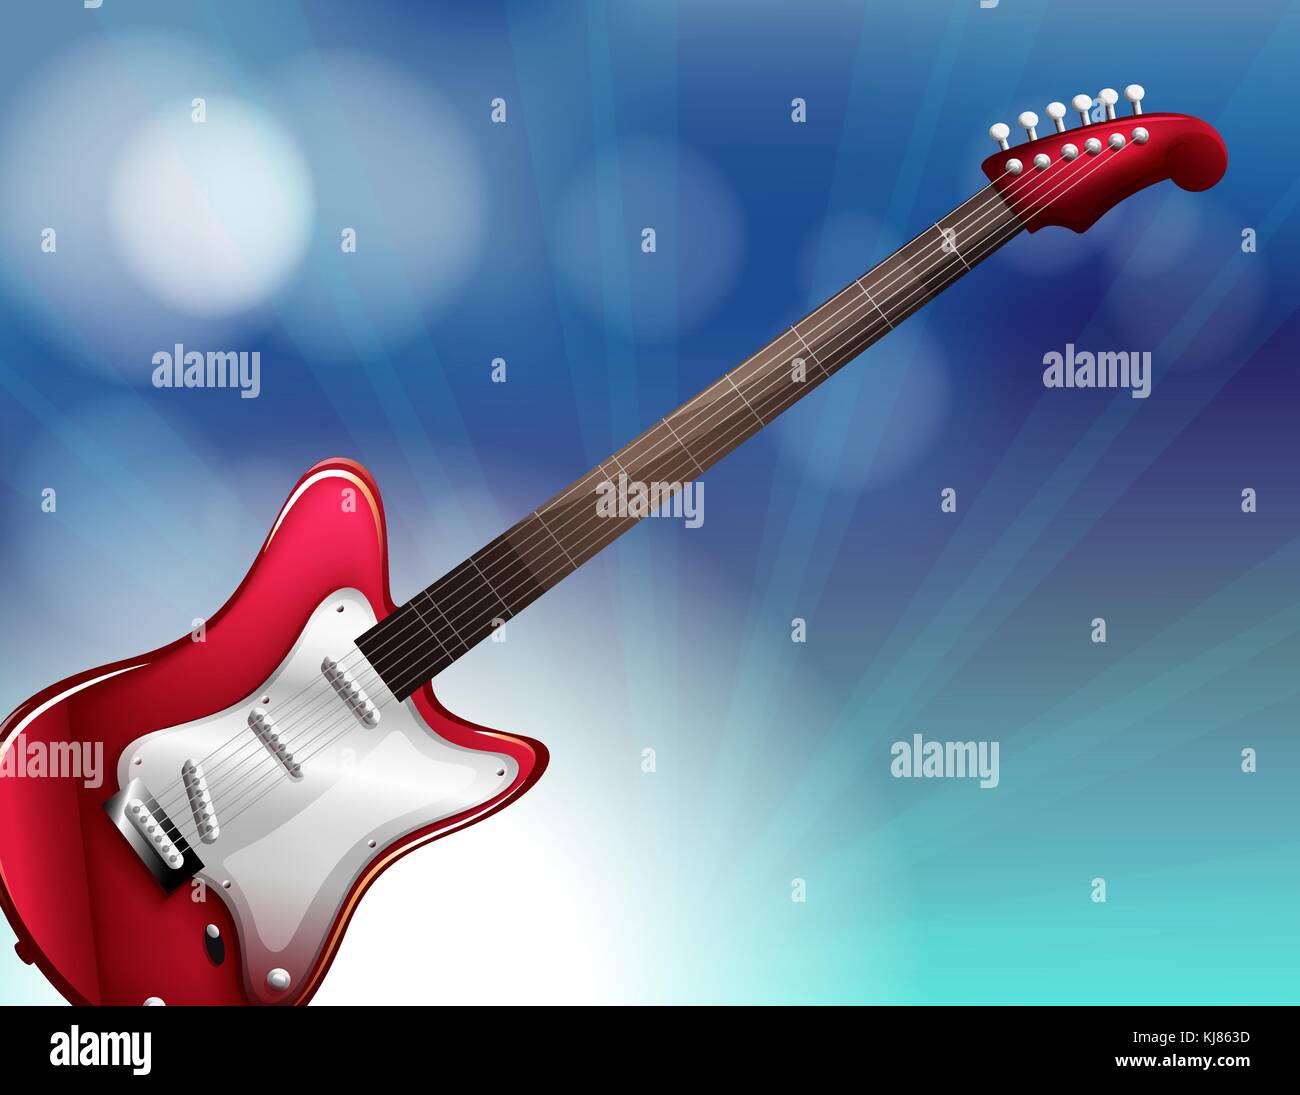 Abbildung: Eine rote E-Gitarre Stock-Vektorgrafik - Alamy